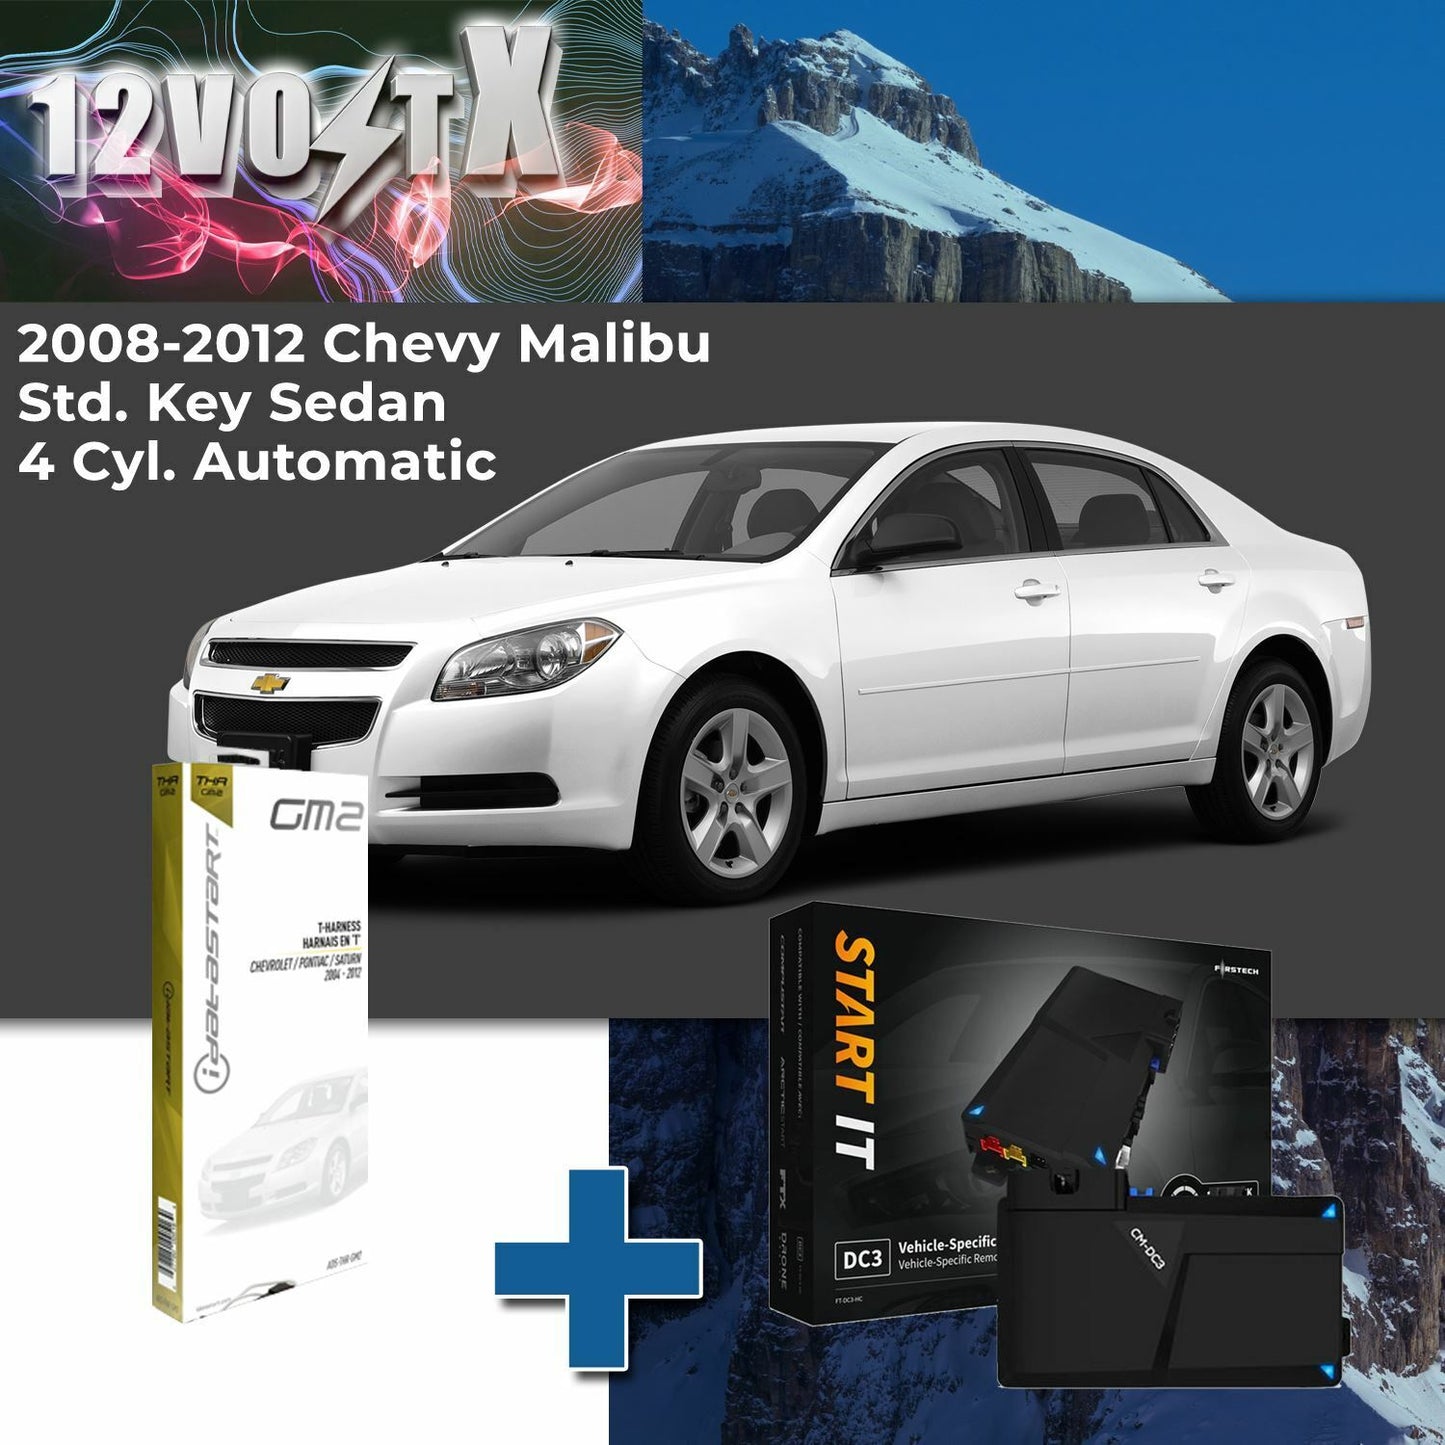 Remote Start System for 2011 Chevy Malibu Std. Key Sedan 4 Cyl. Automatic